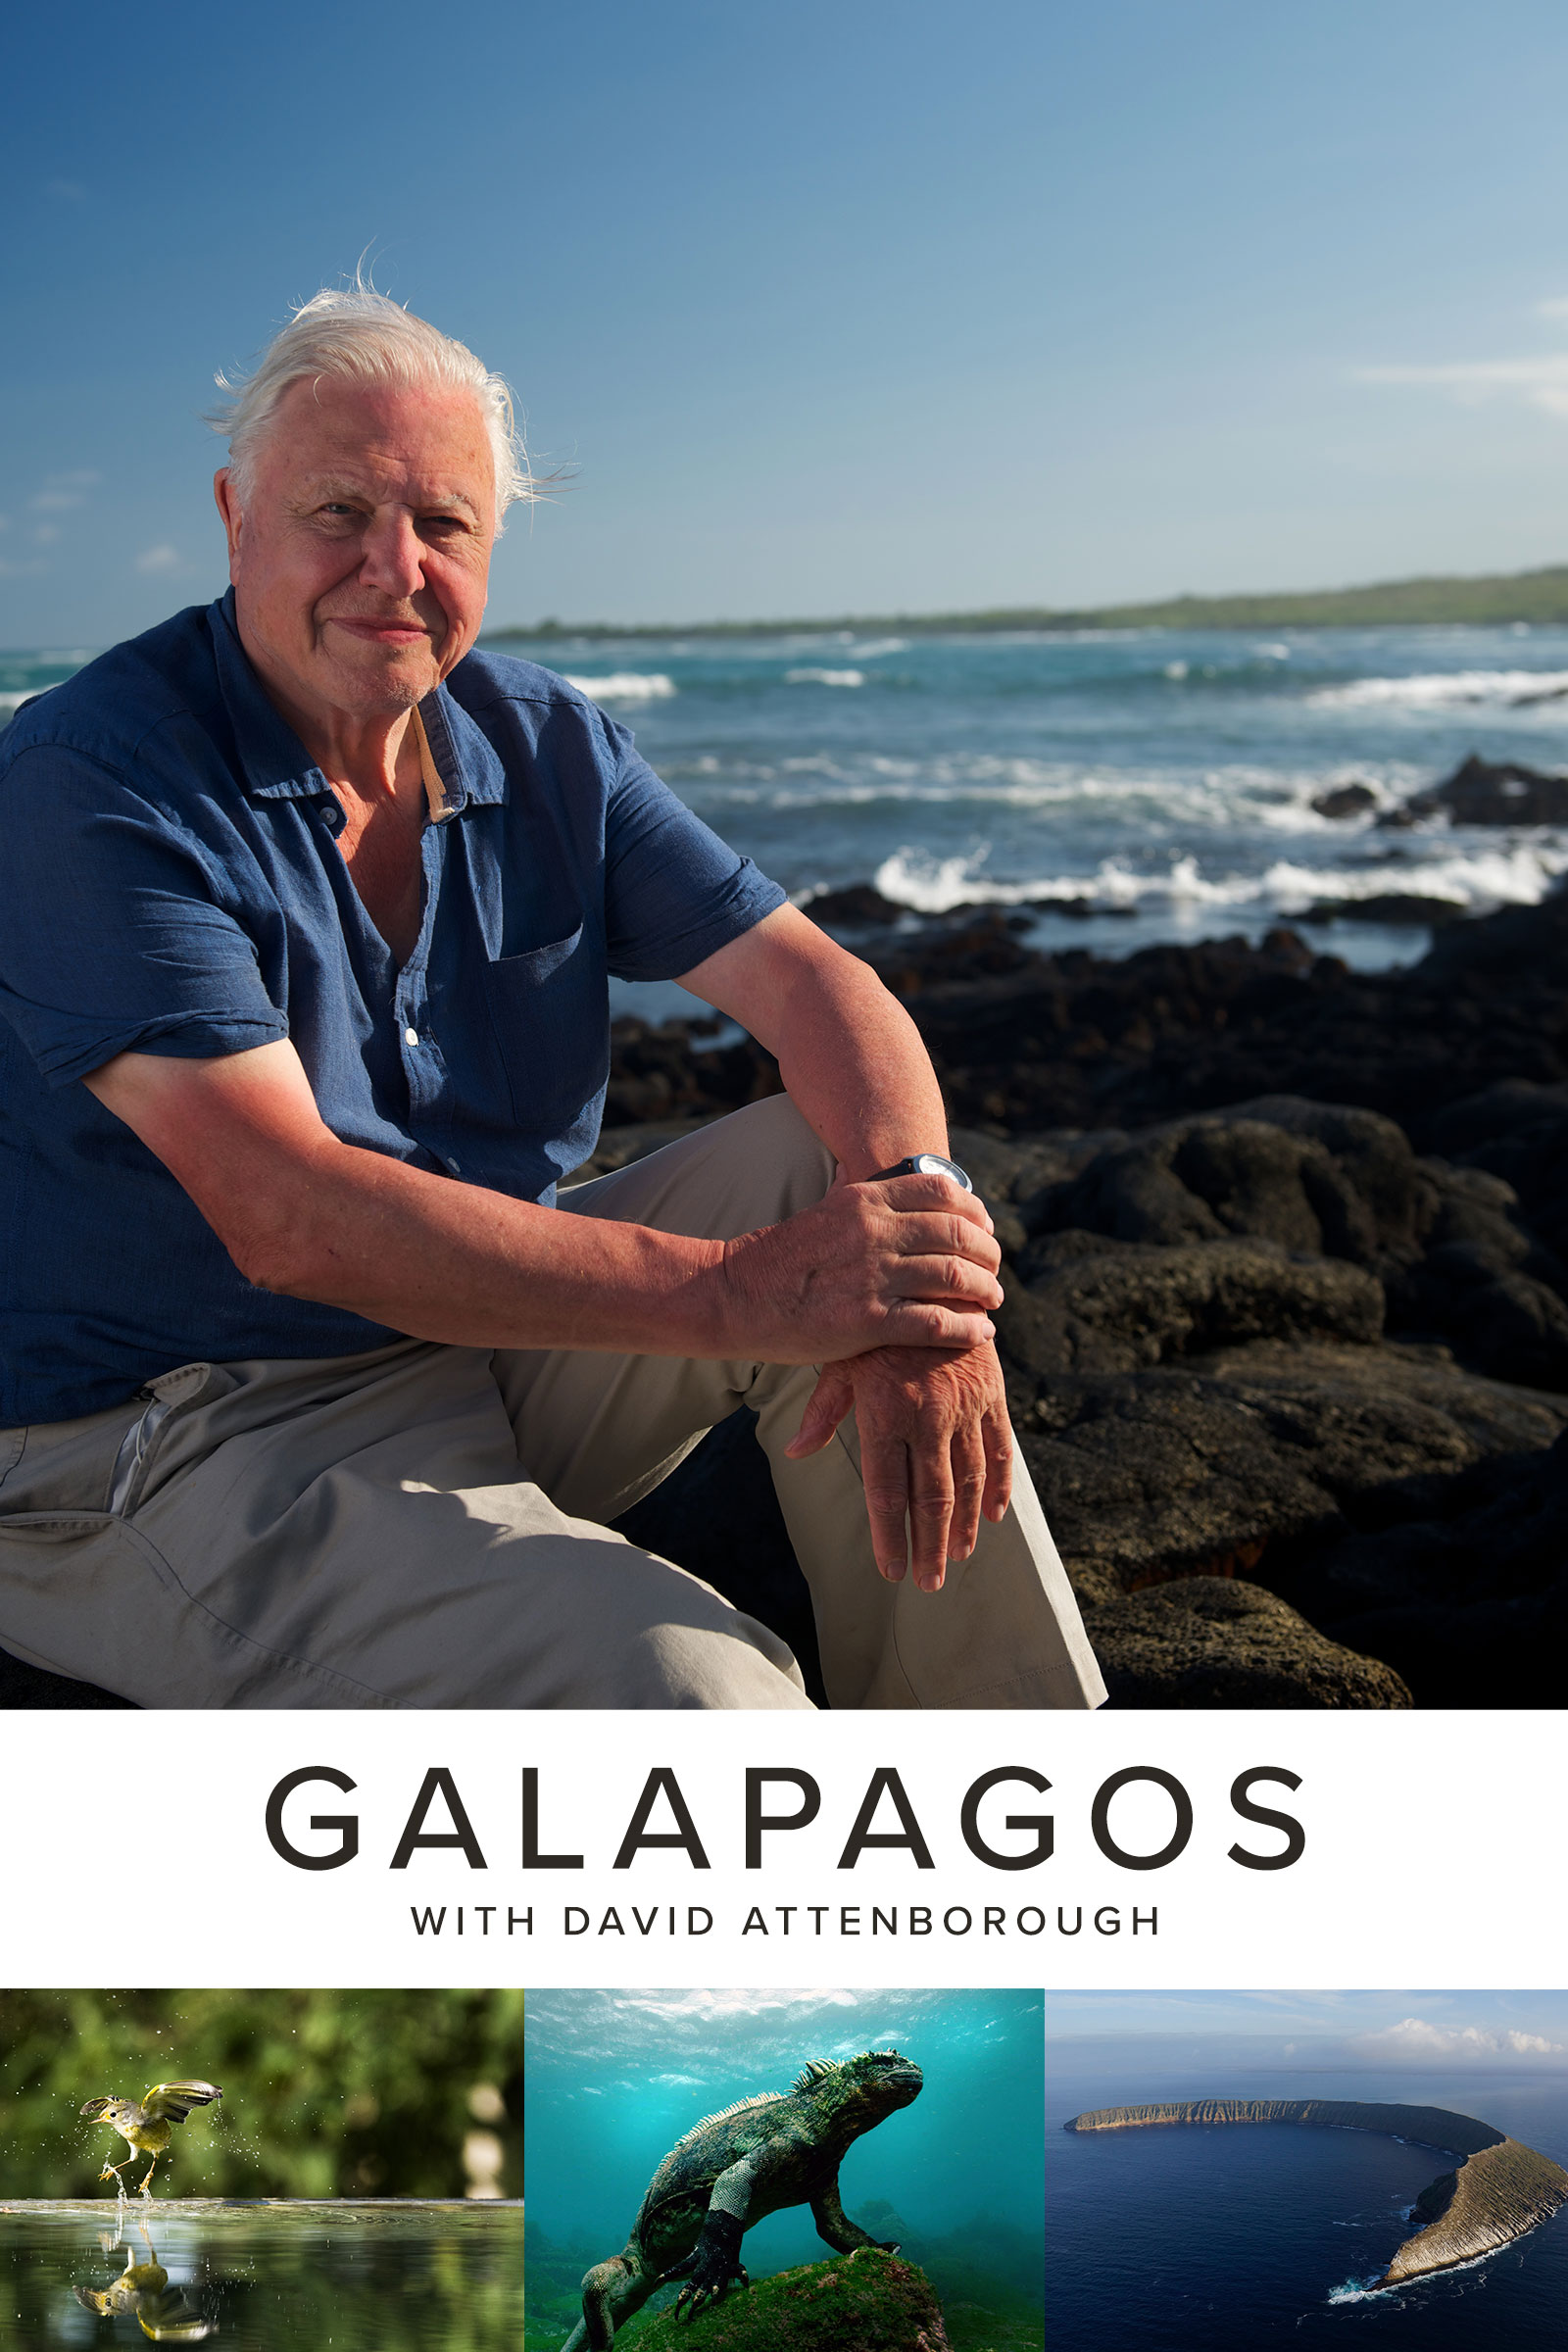 Where to stream Galapagos With David Attenborough